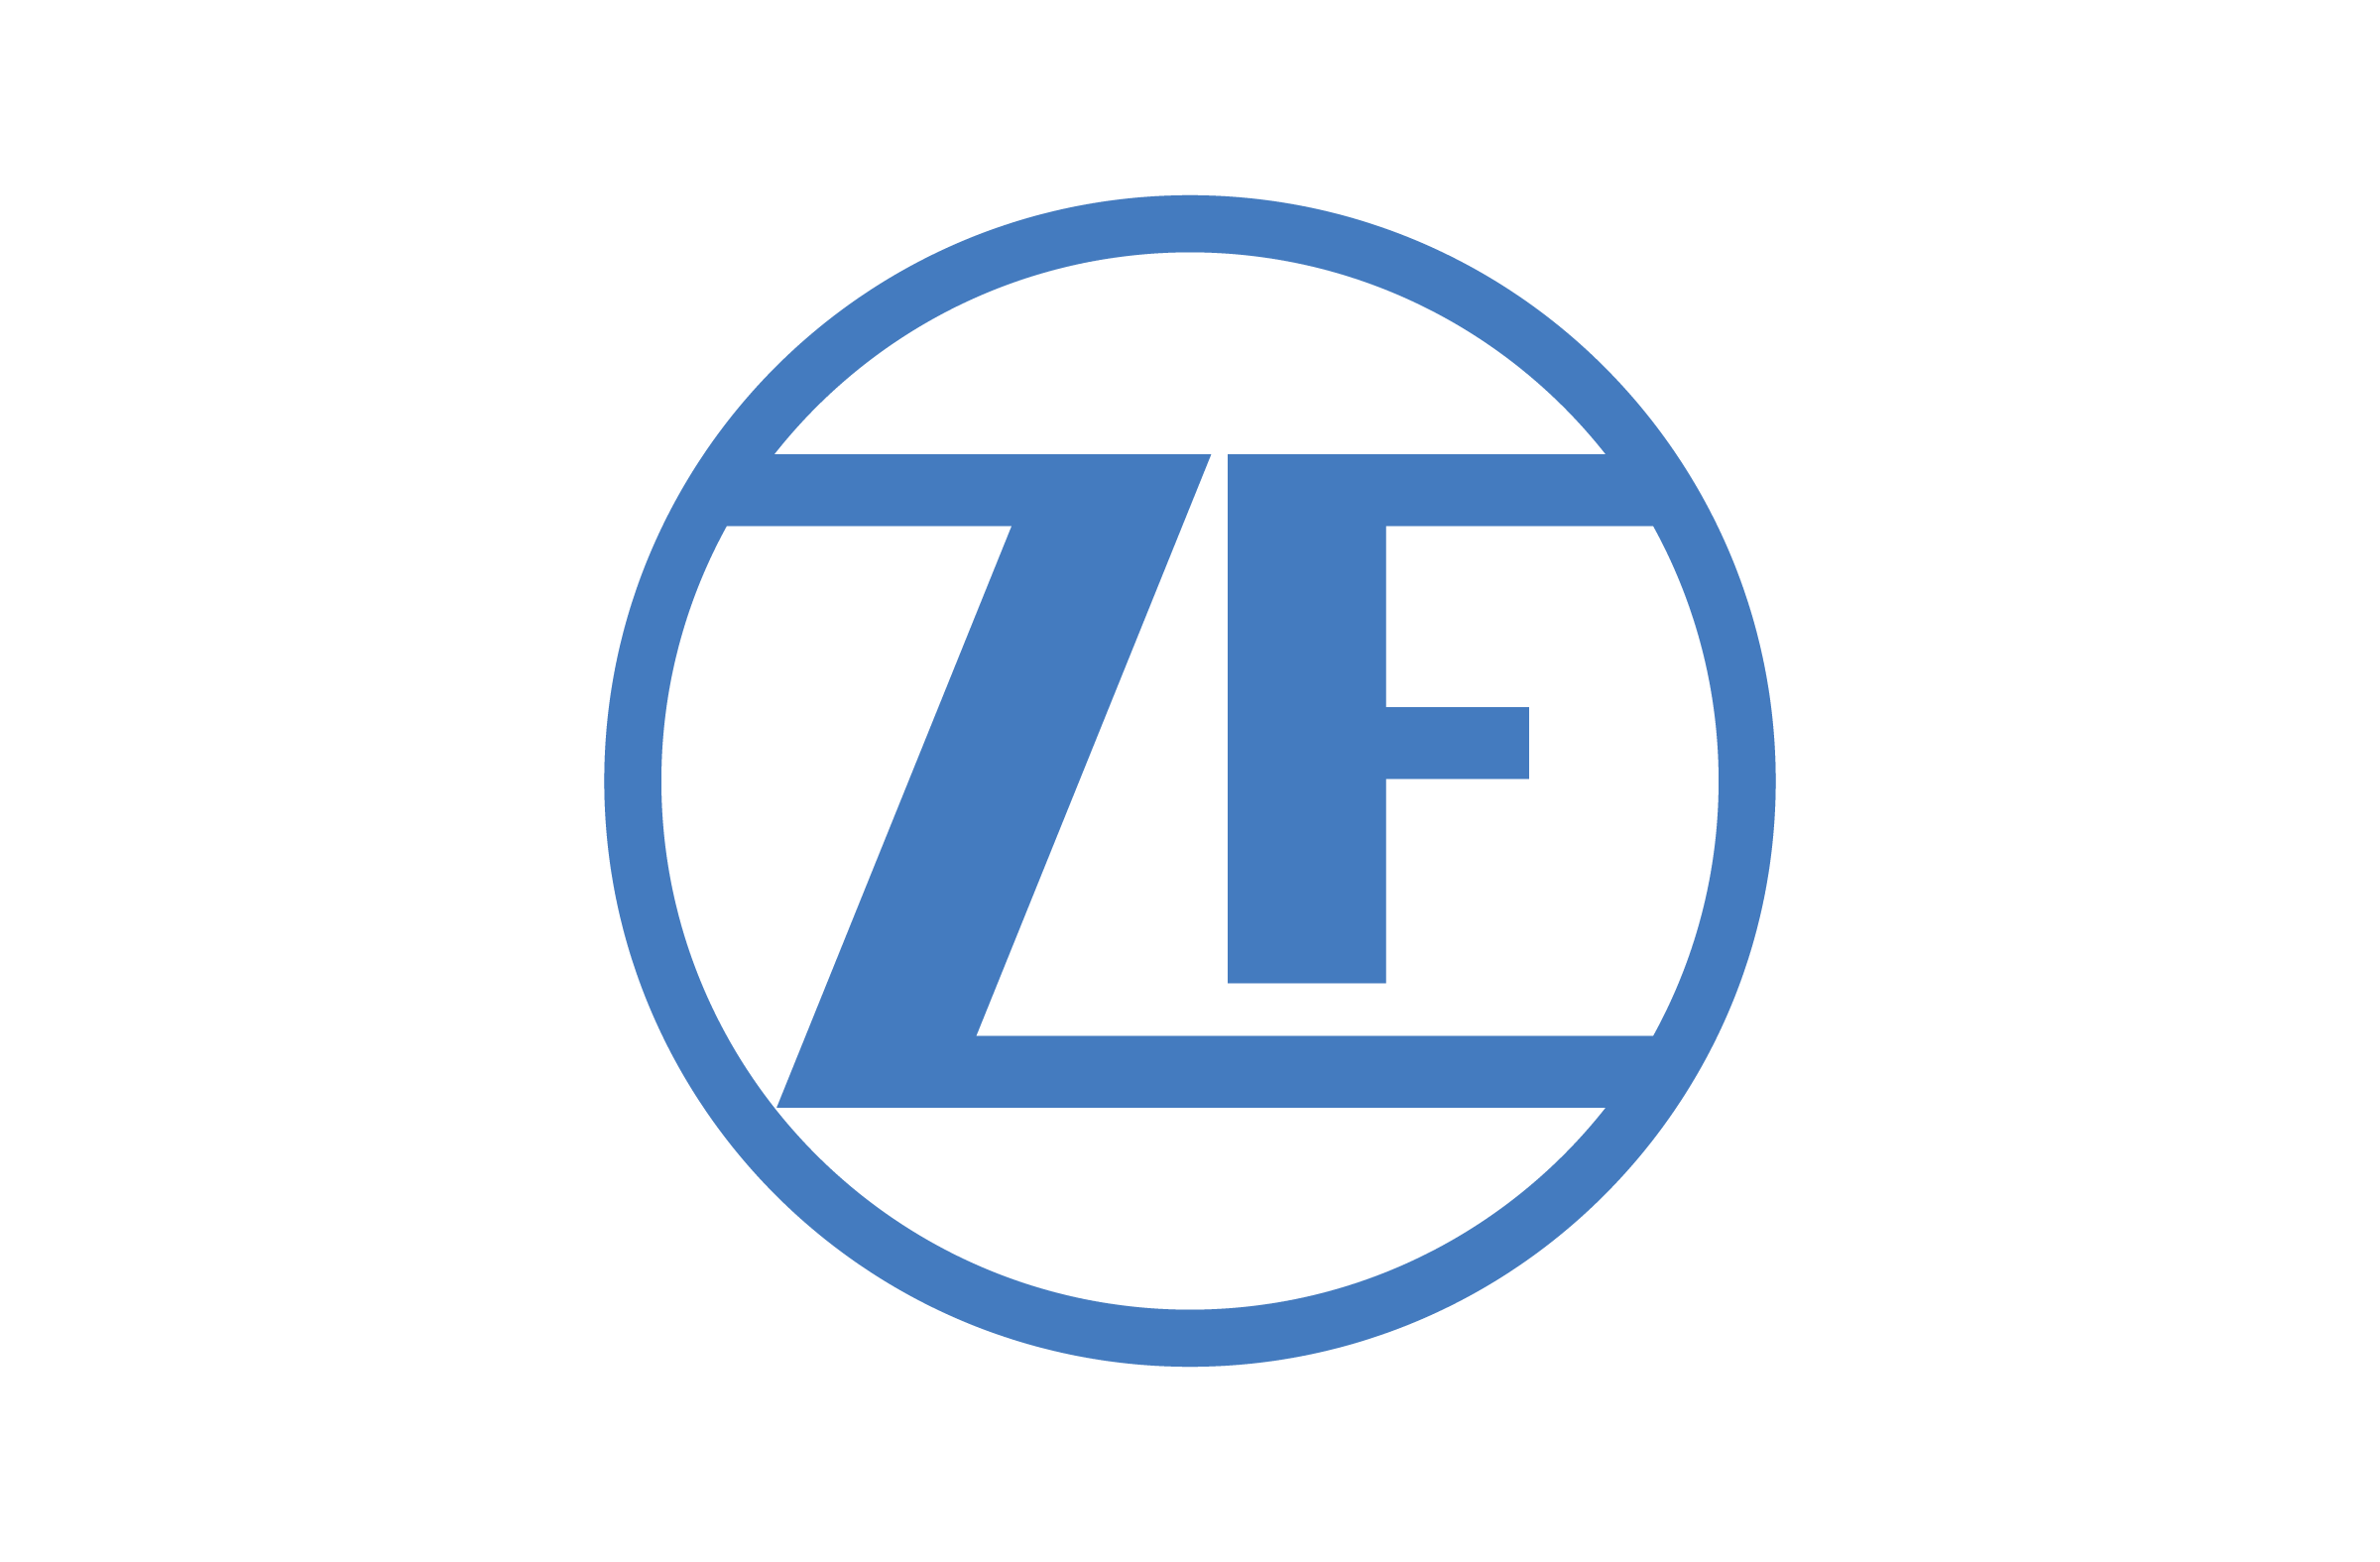 new-ZF-logo